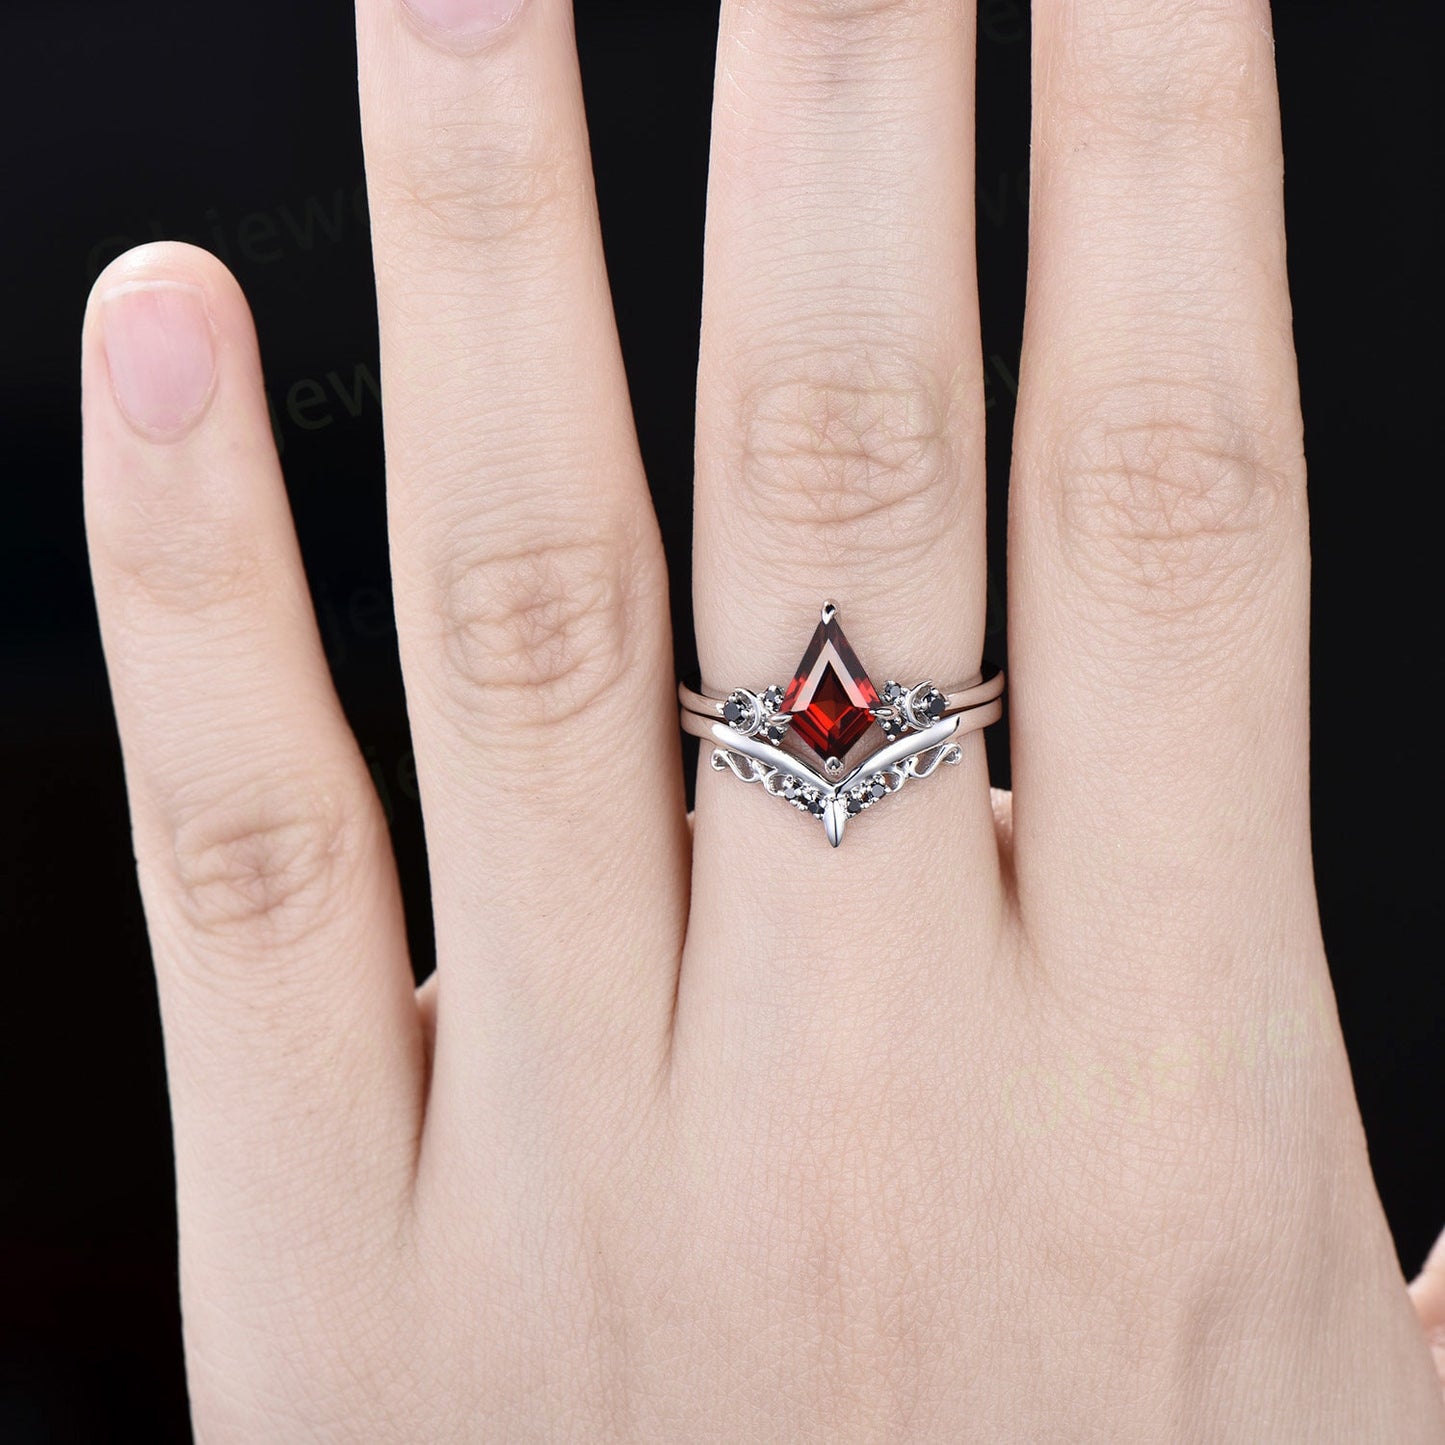 Kite cut red garnet engagement ring Moon black diamond ring solid 14k white gold art deco antique promise anniversary ring women jewelry